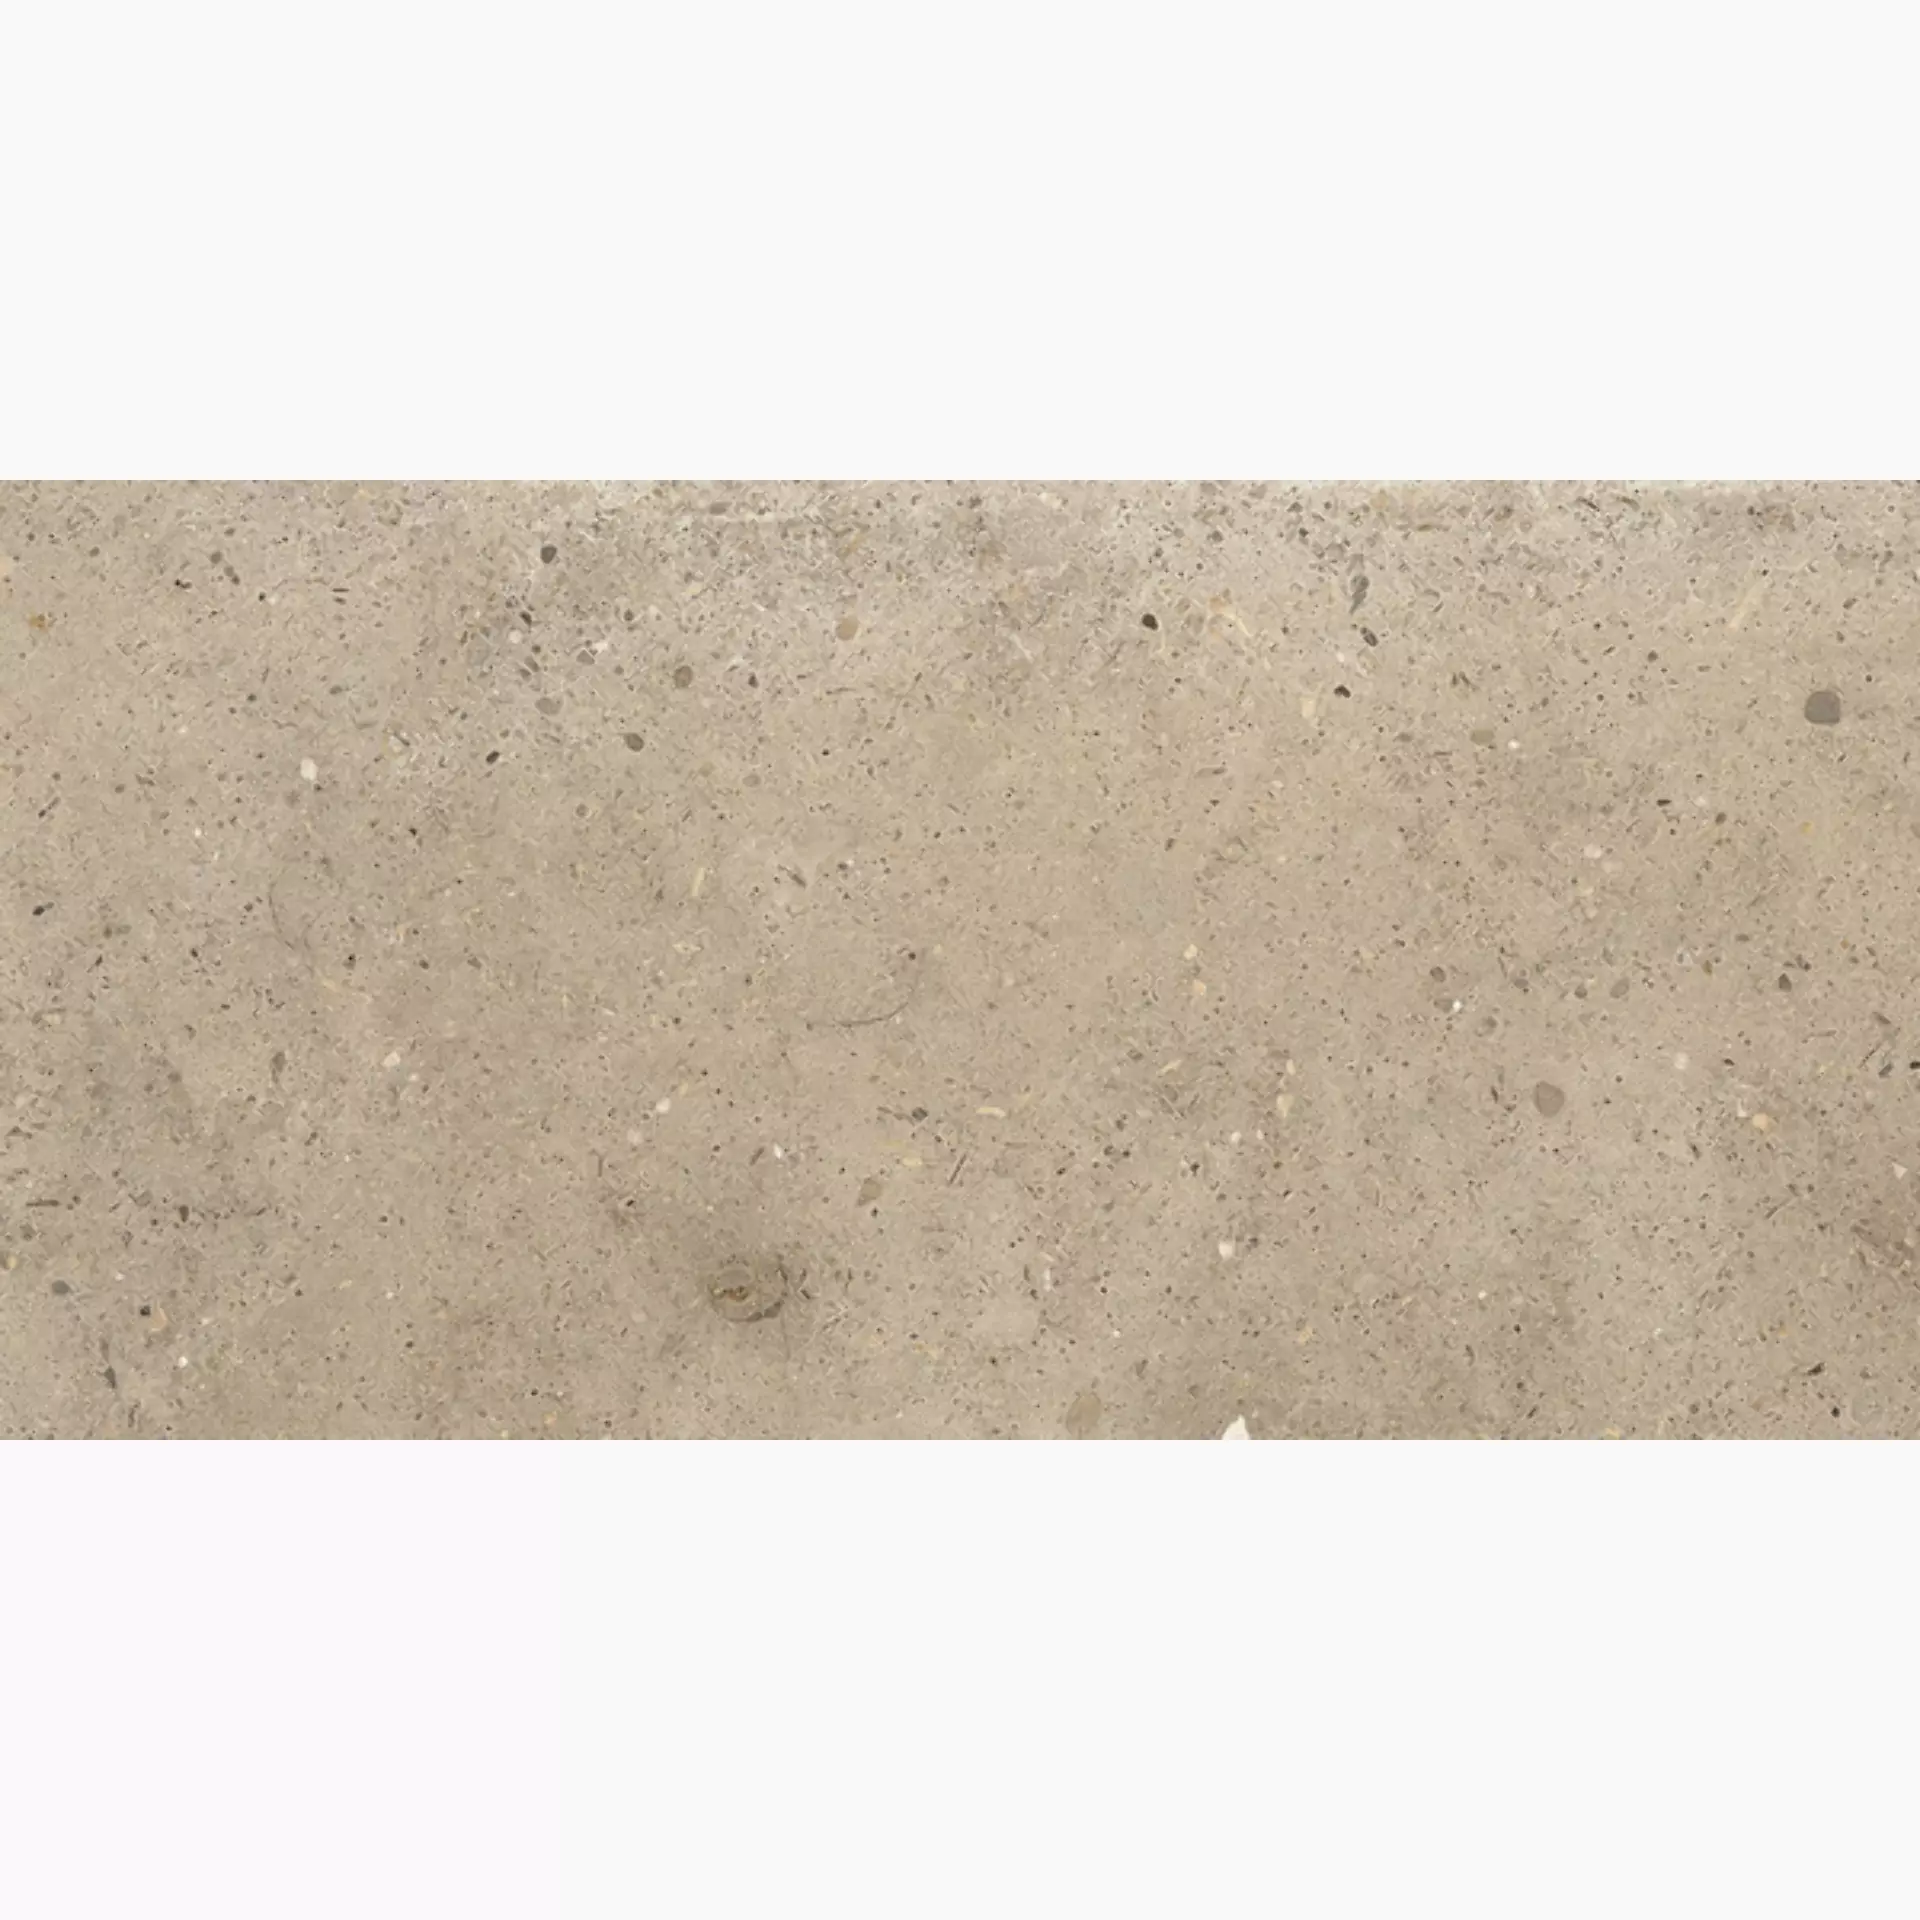 Iris Whole Stone Sand Naturale 863716 30x60cm rectified 9mm